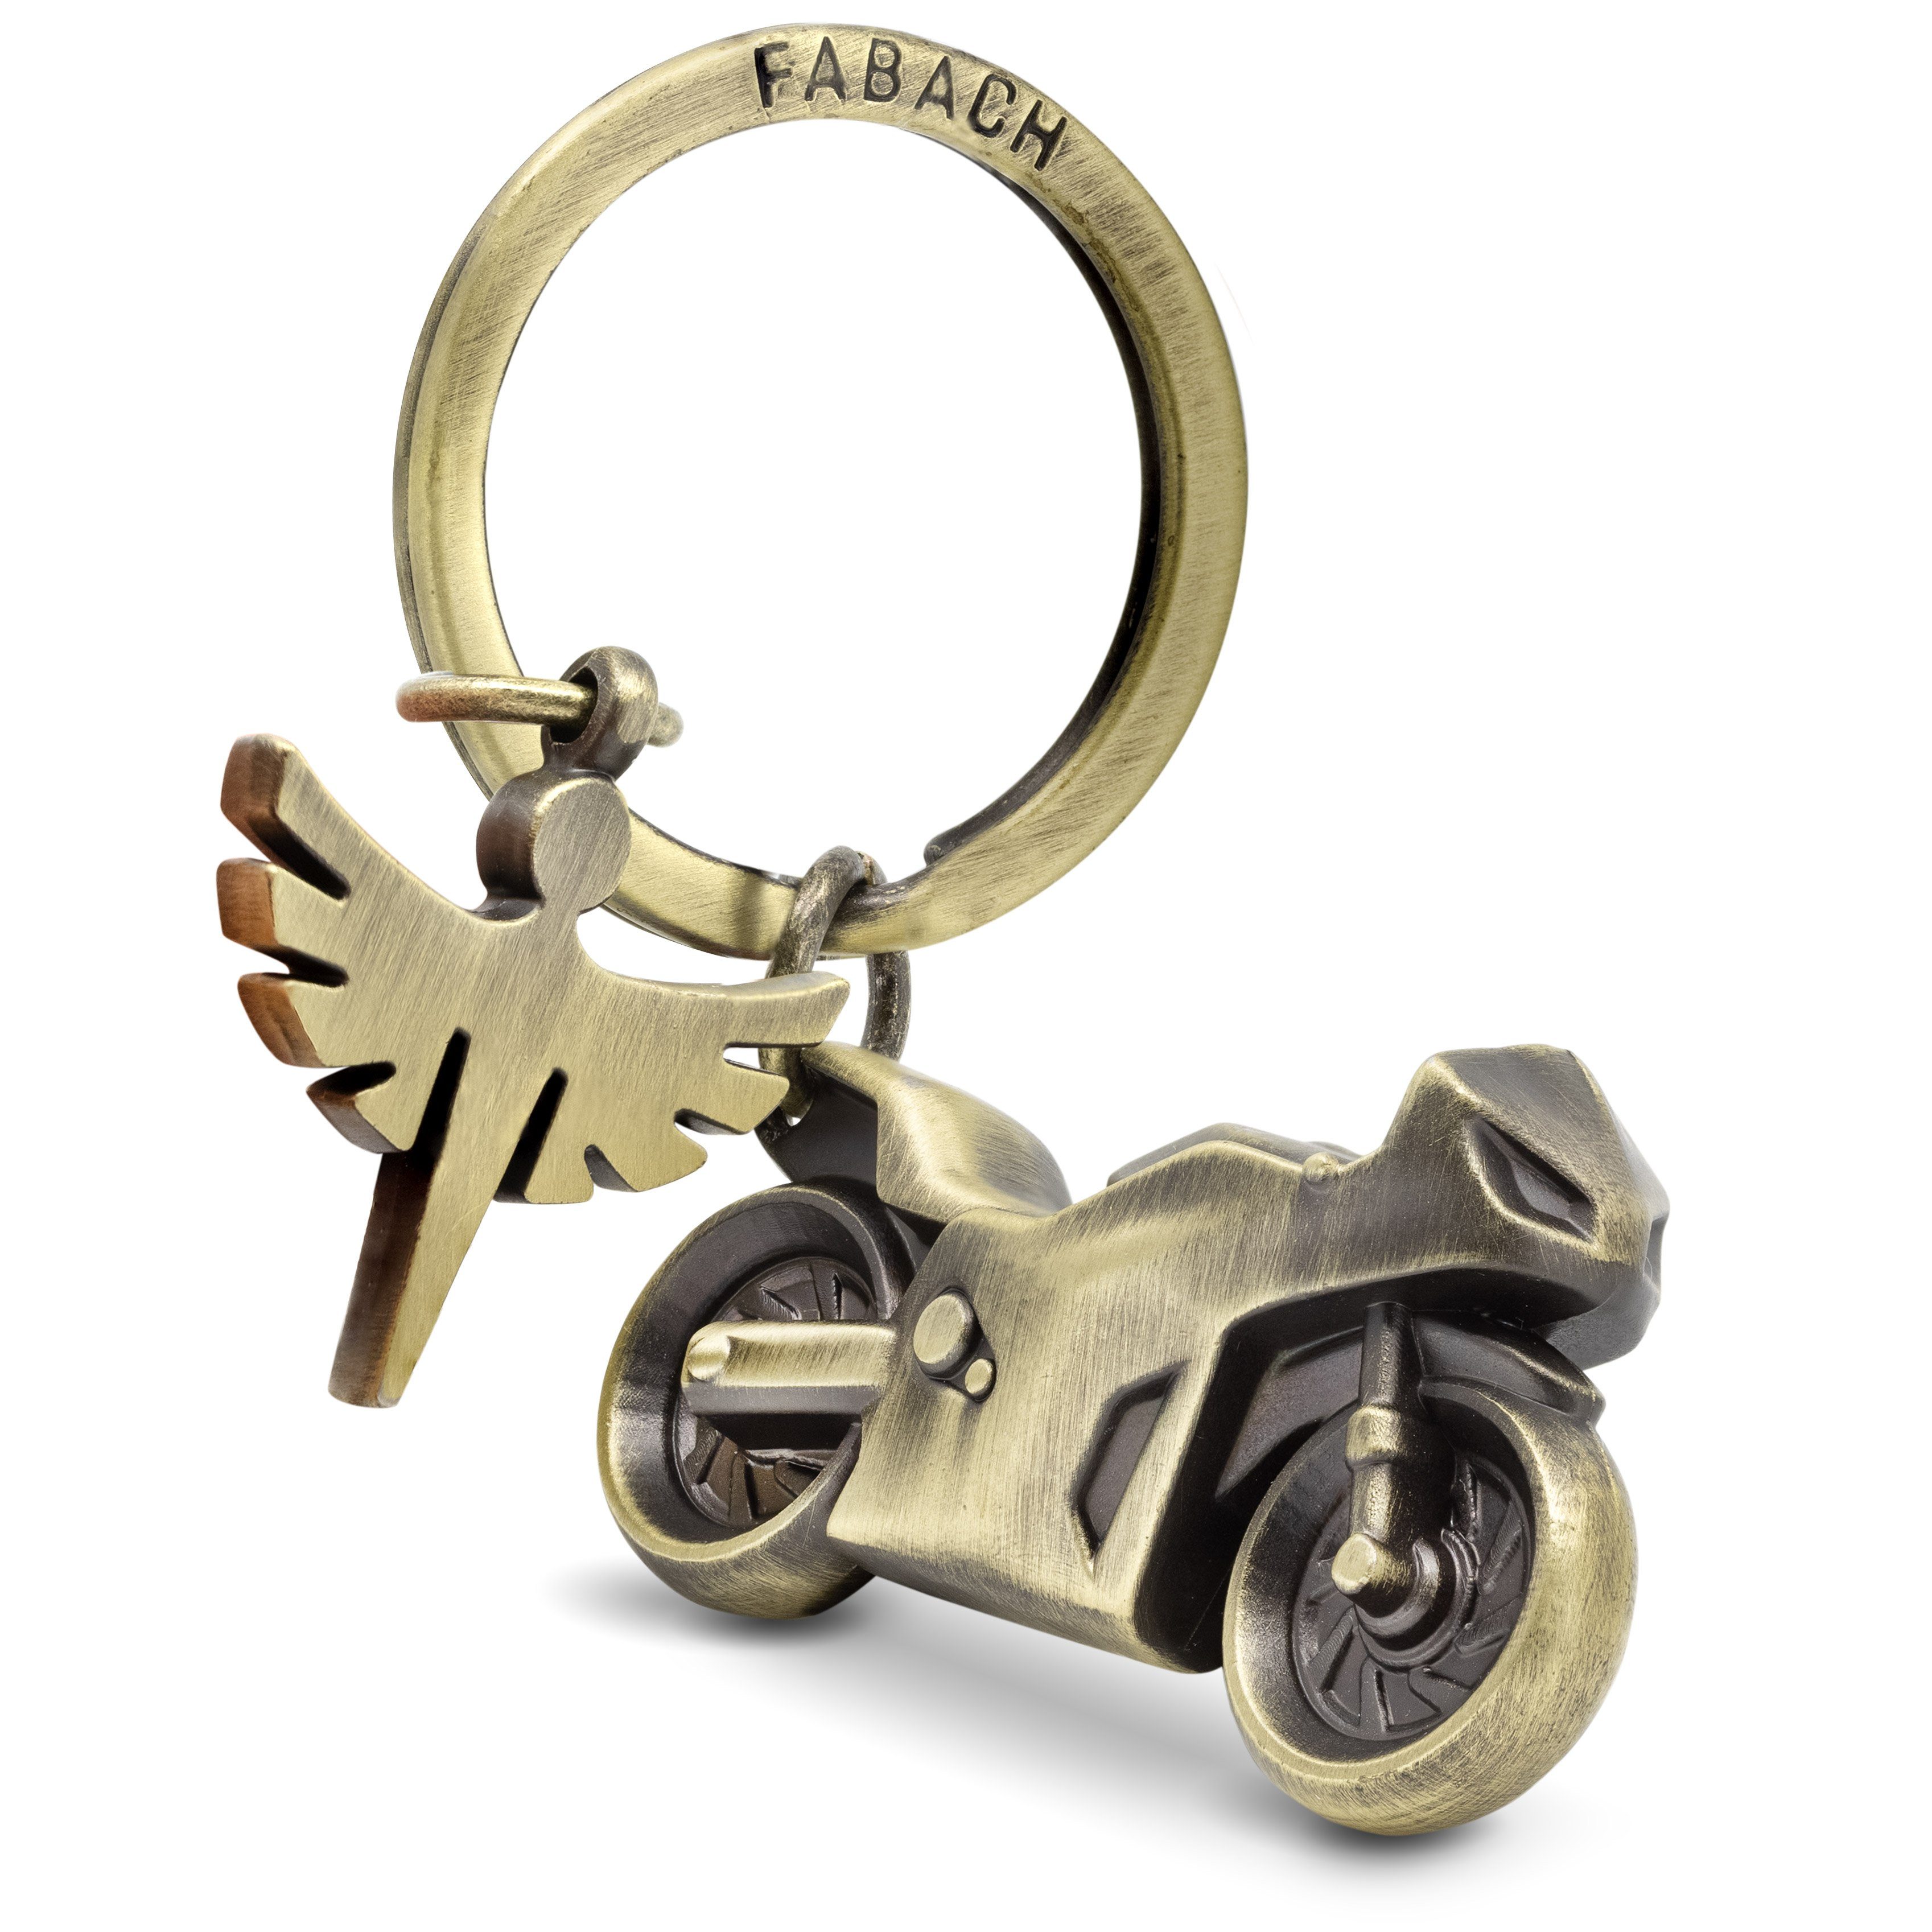 FABACH Schlüsselanhänger Motorrad - Schutzengel Antique Bronze Schlüsselanhänger Motorradfahrer für